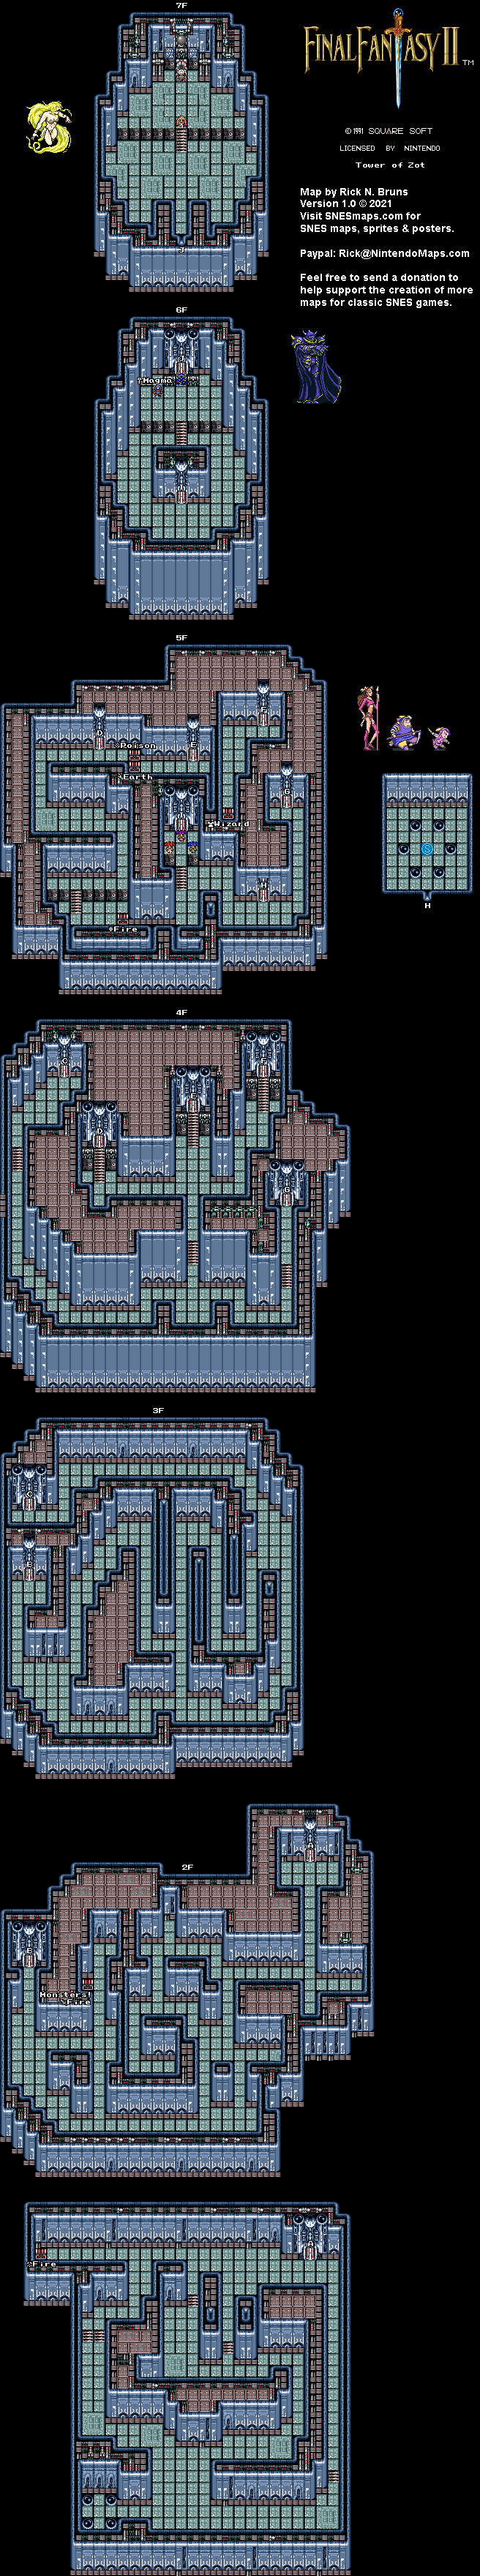 Final Fantasy II 2 (IV 4) - Tower of Zot Super Nintendo SNES Map